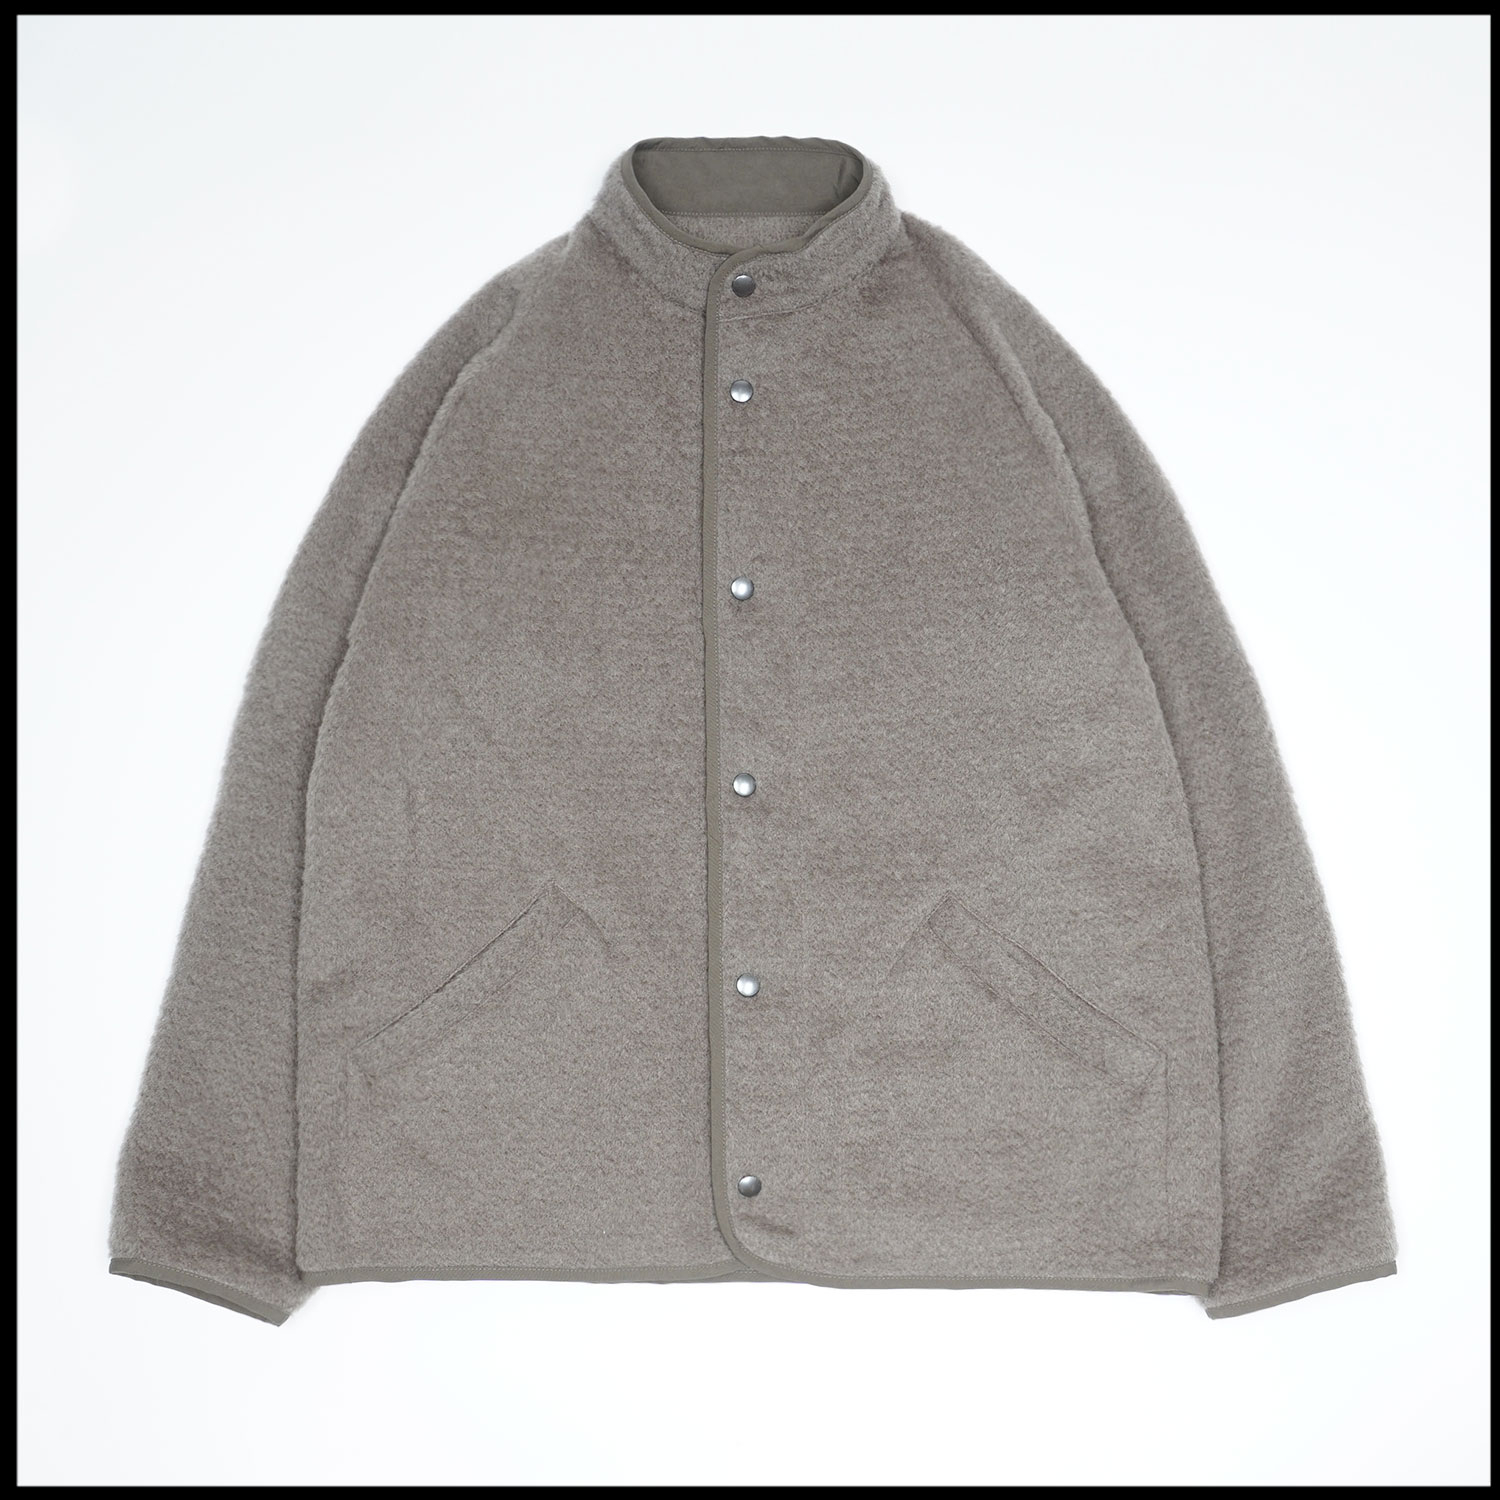 CONTOUR Jacket in Warm grey color by Arpenteur